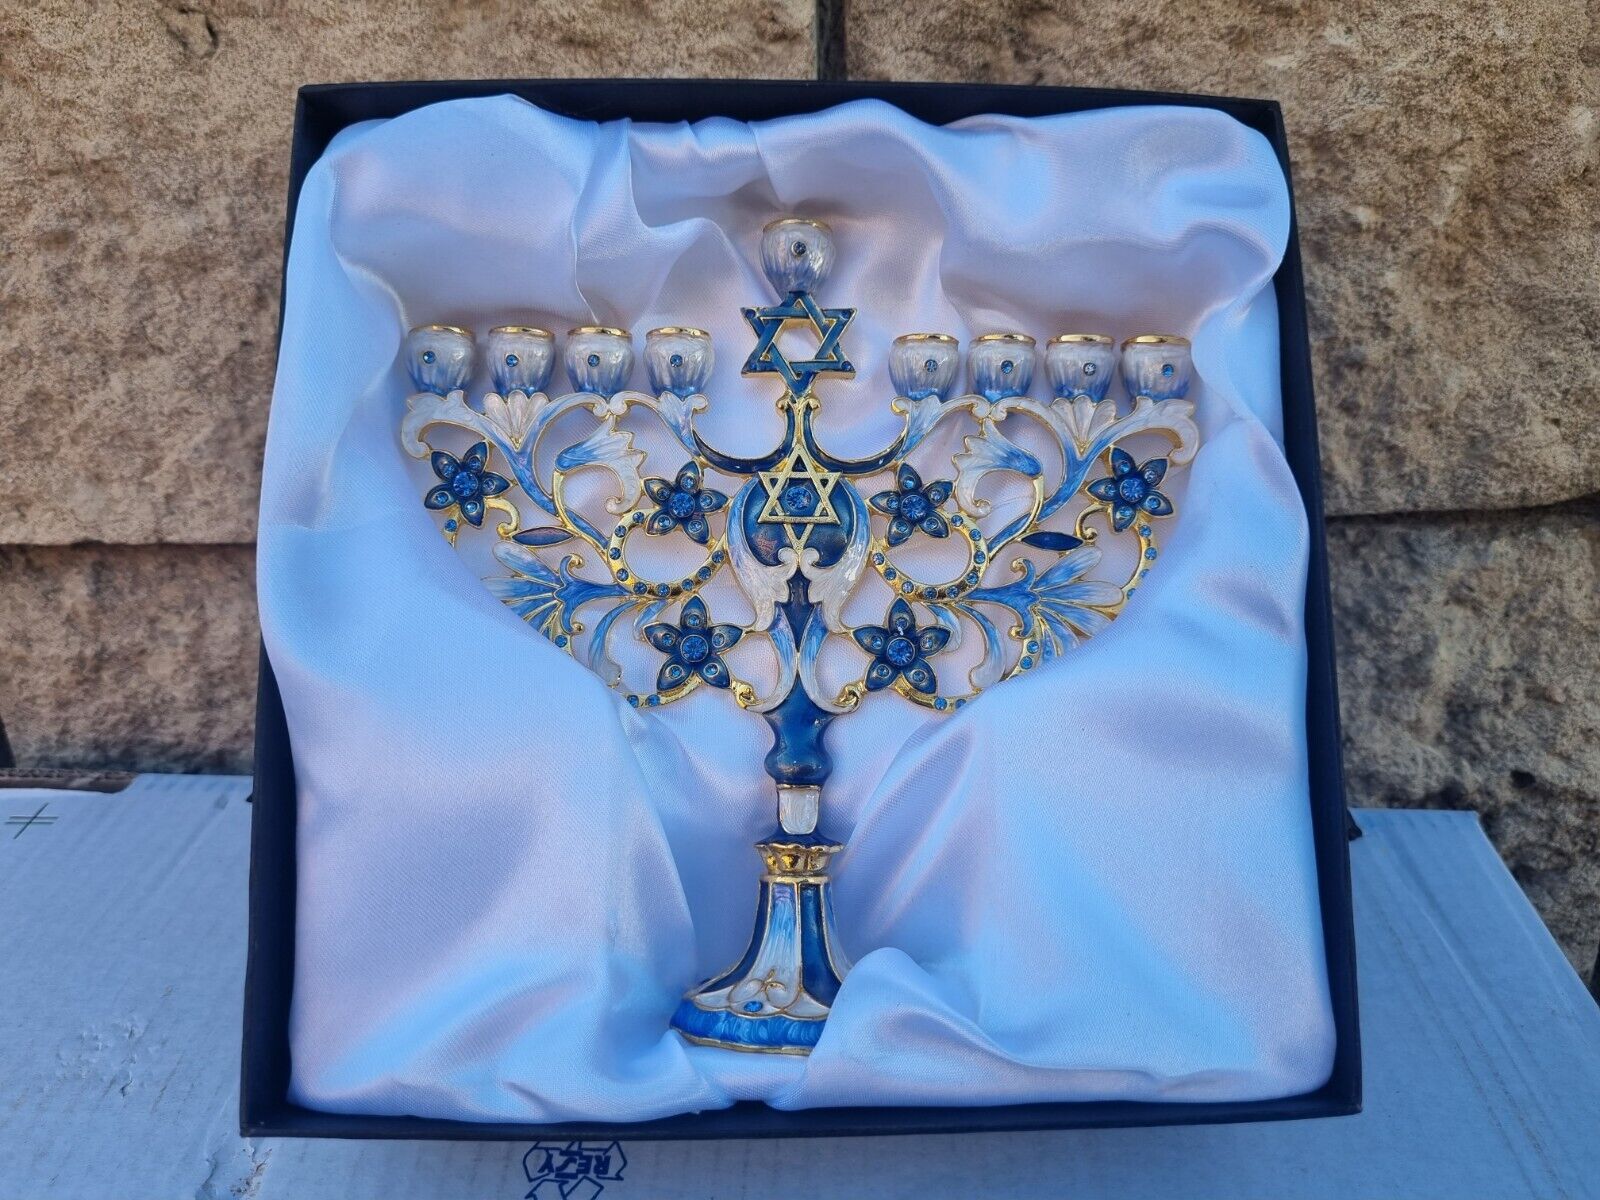 Hanukkah Menorah Star of david design 9 Branches Vintage Chanukah Candle Holder